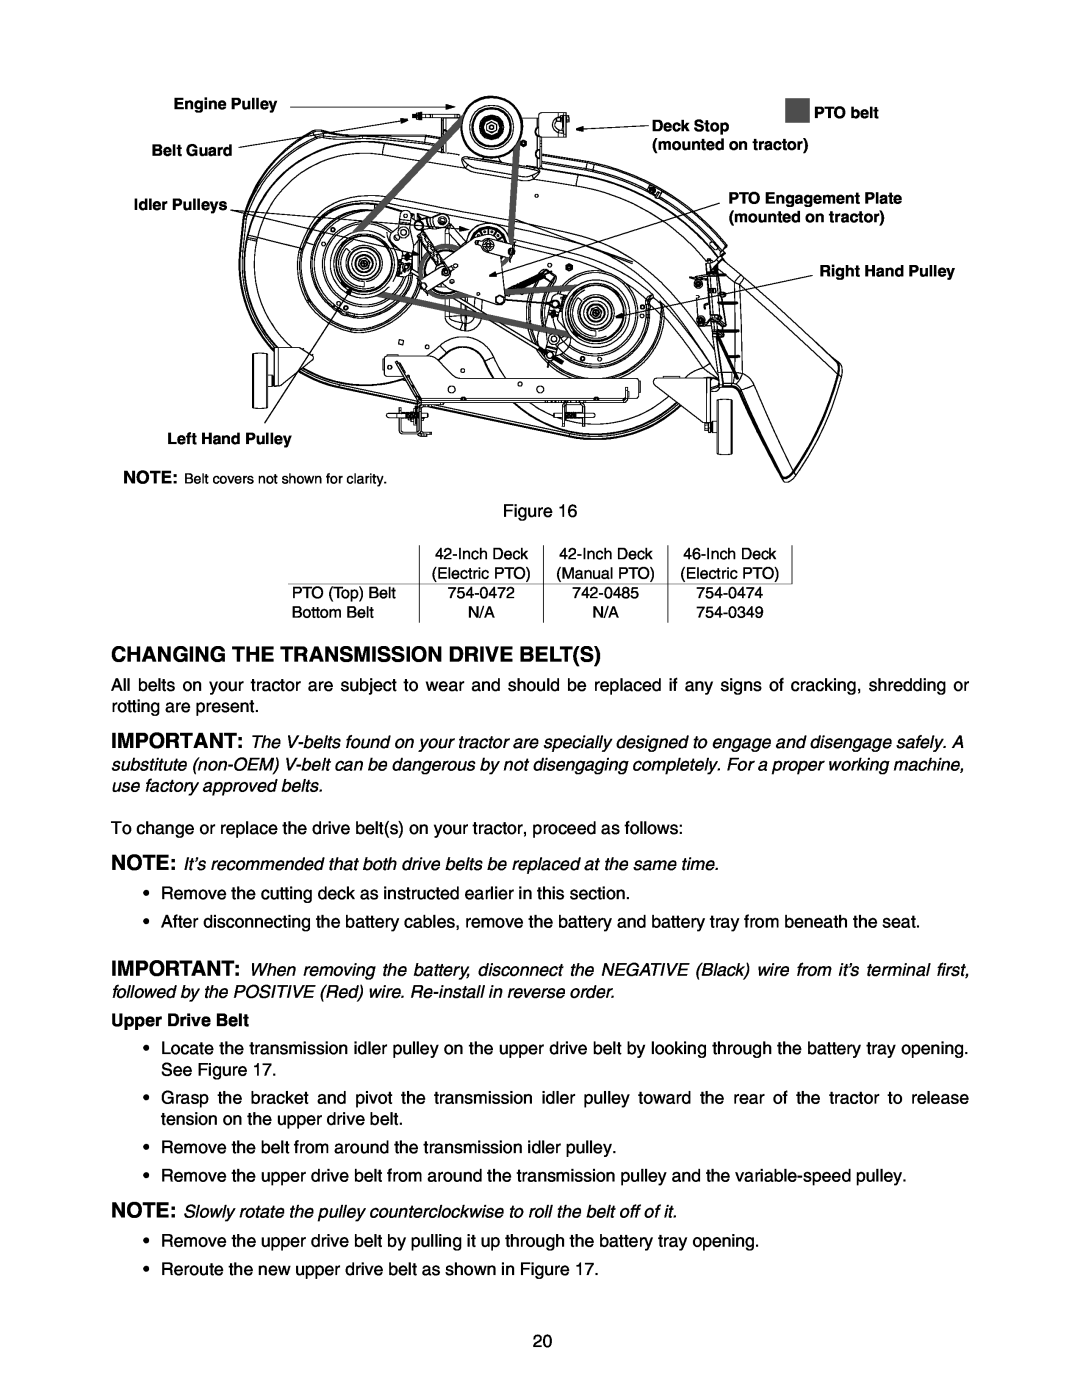 MTD 604 manual Changing The Transmission Drive Belts, Upper Drive Belt 